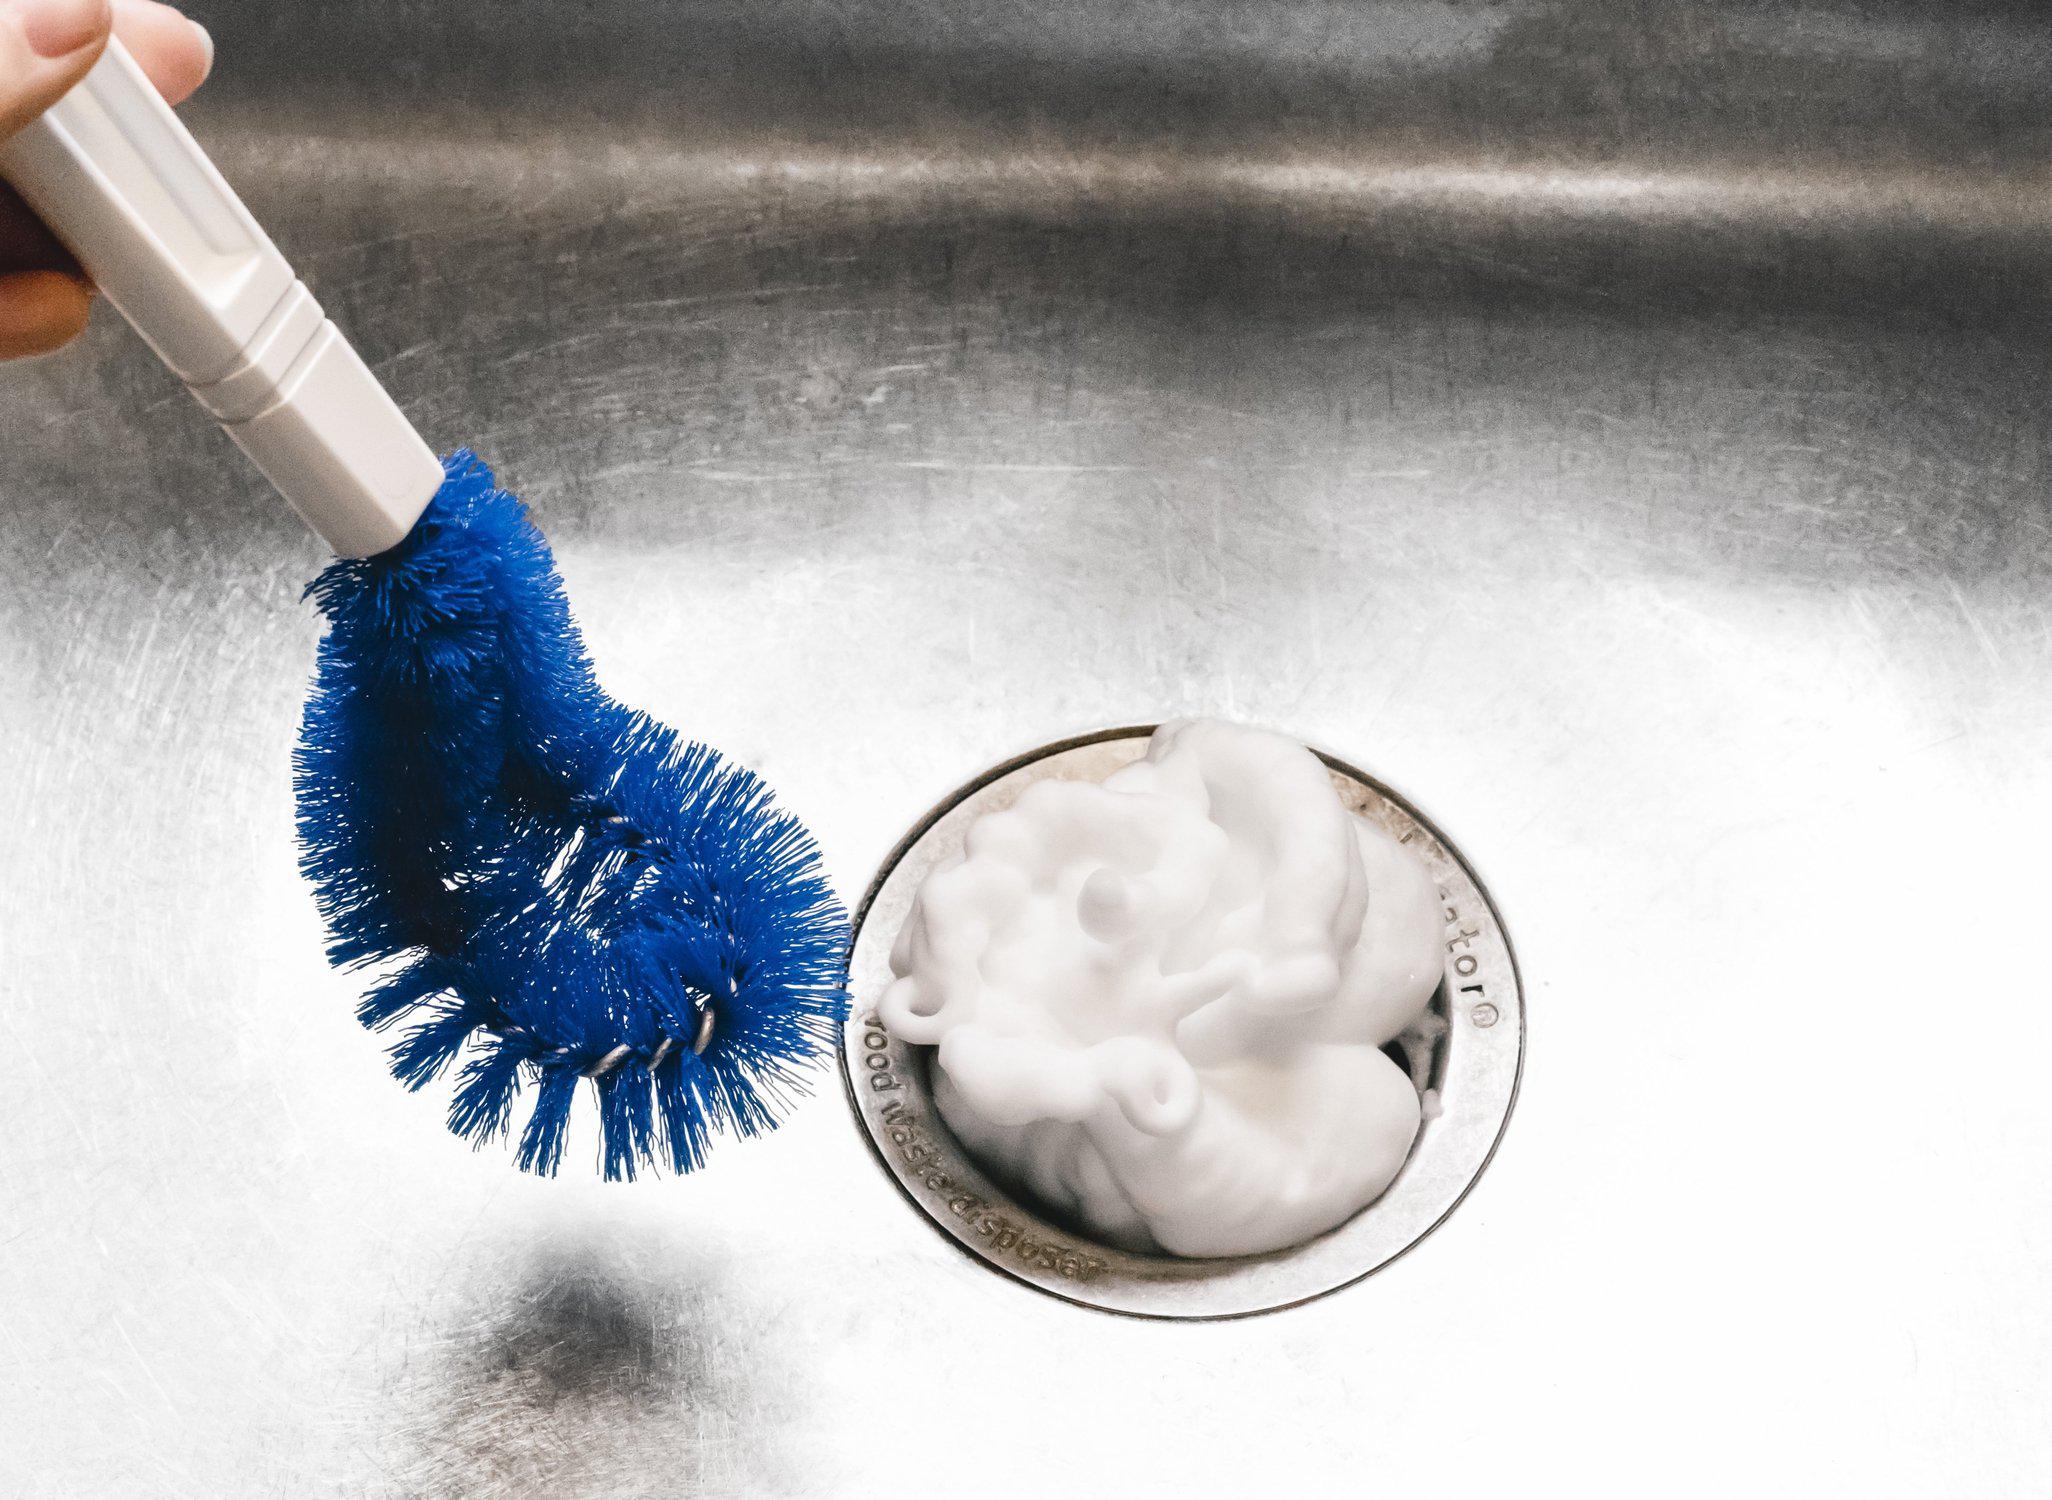 Garbage Disposal Brush Universal Heavy Duty Stiff Bristle Drain Cleaner